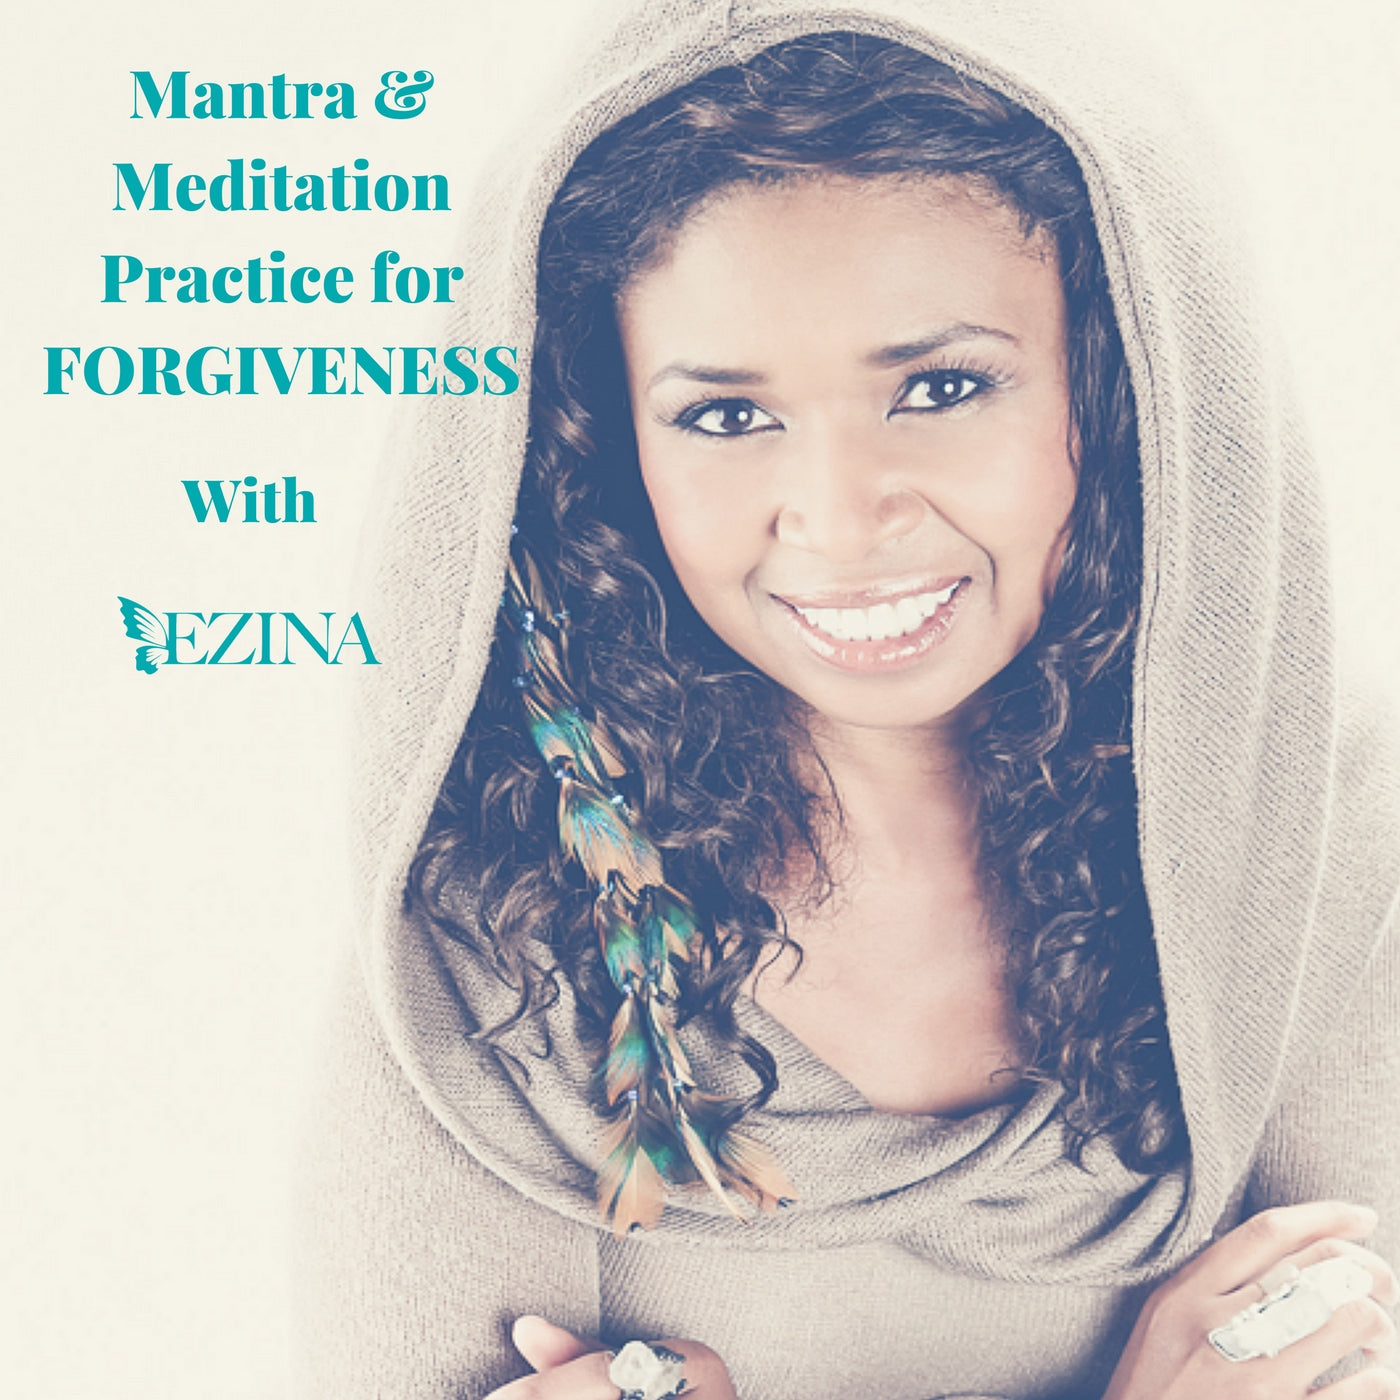 Mantra & Meditation Practice for Forgiveness